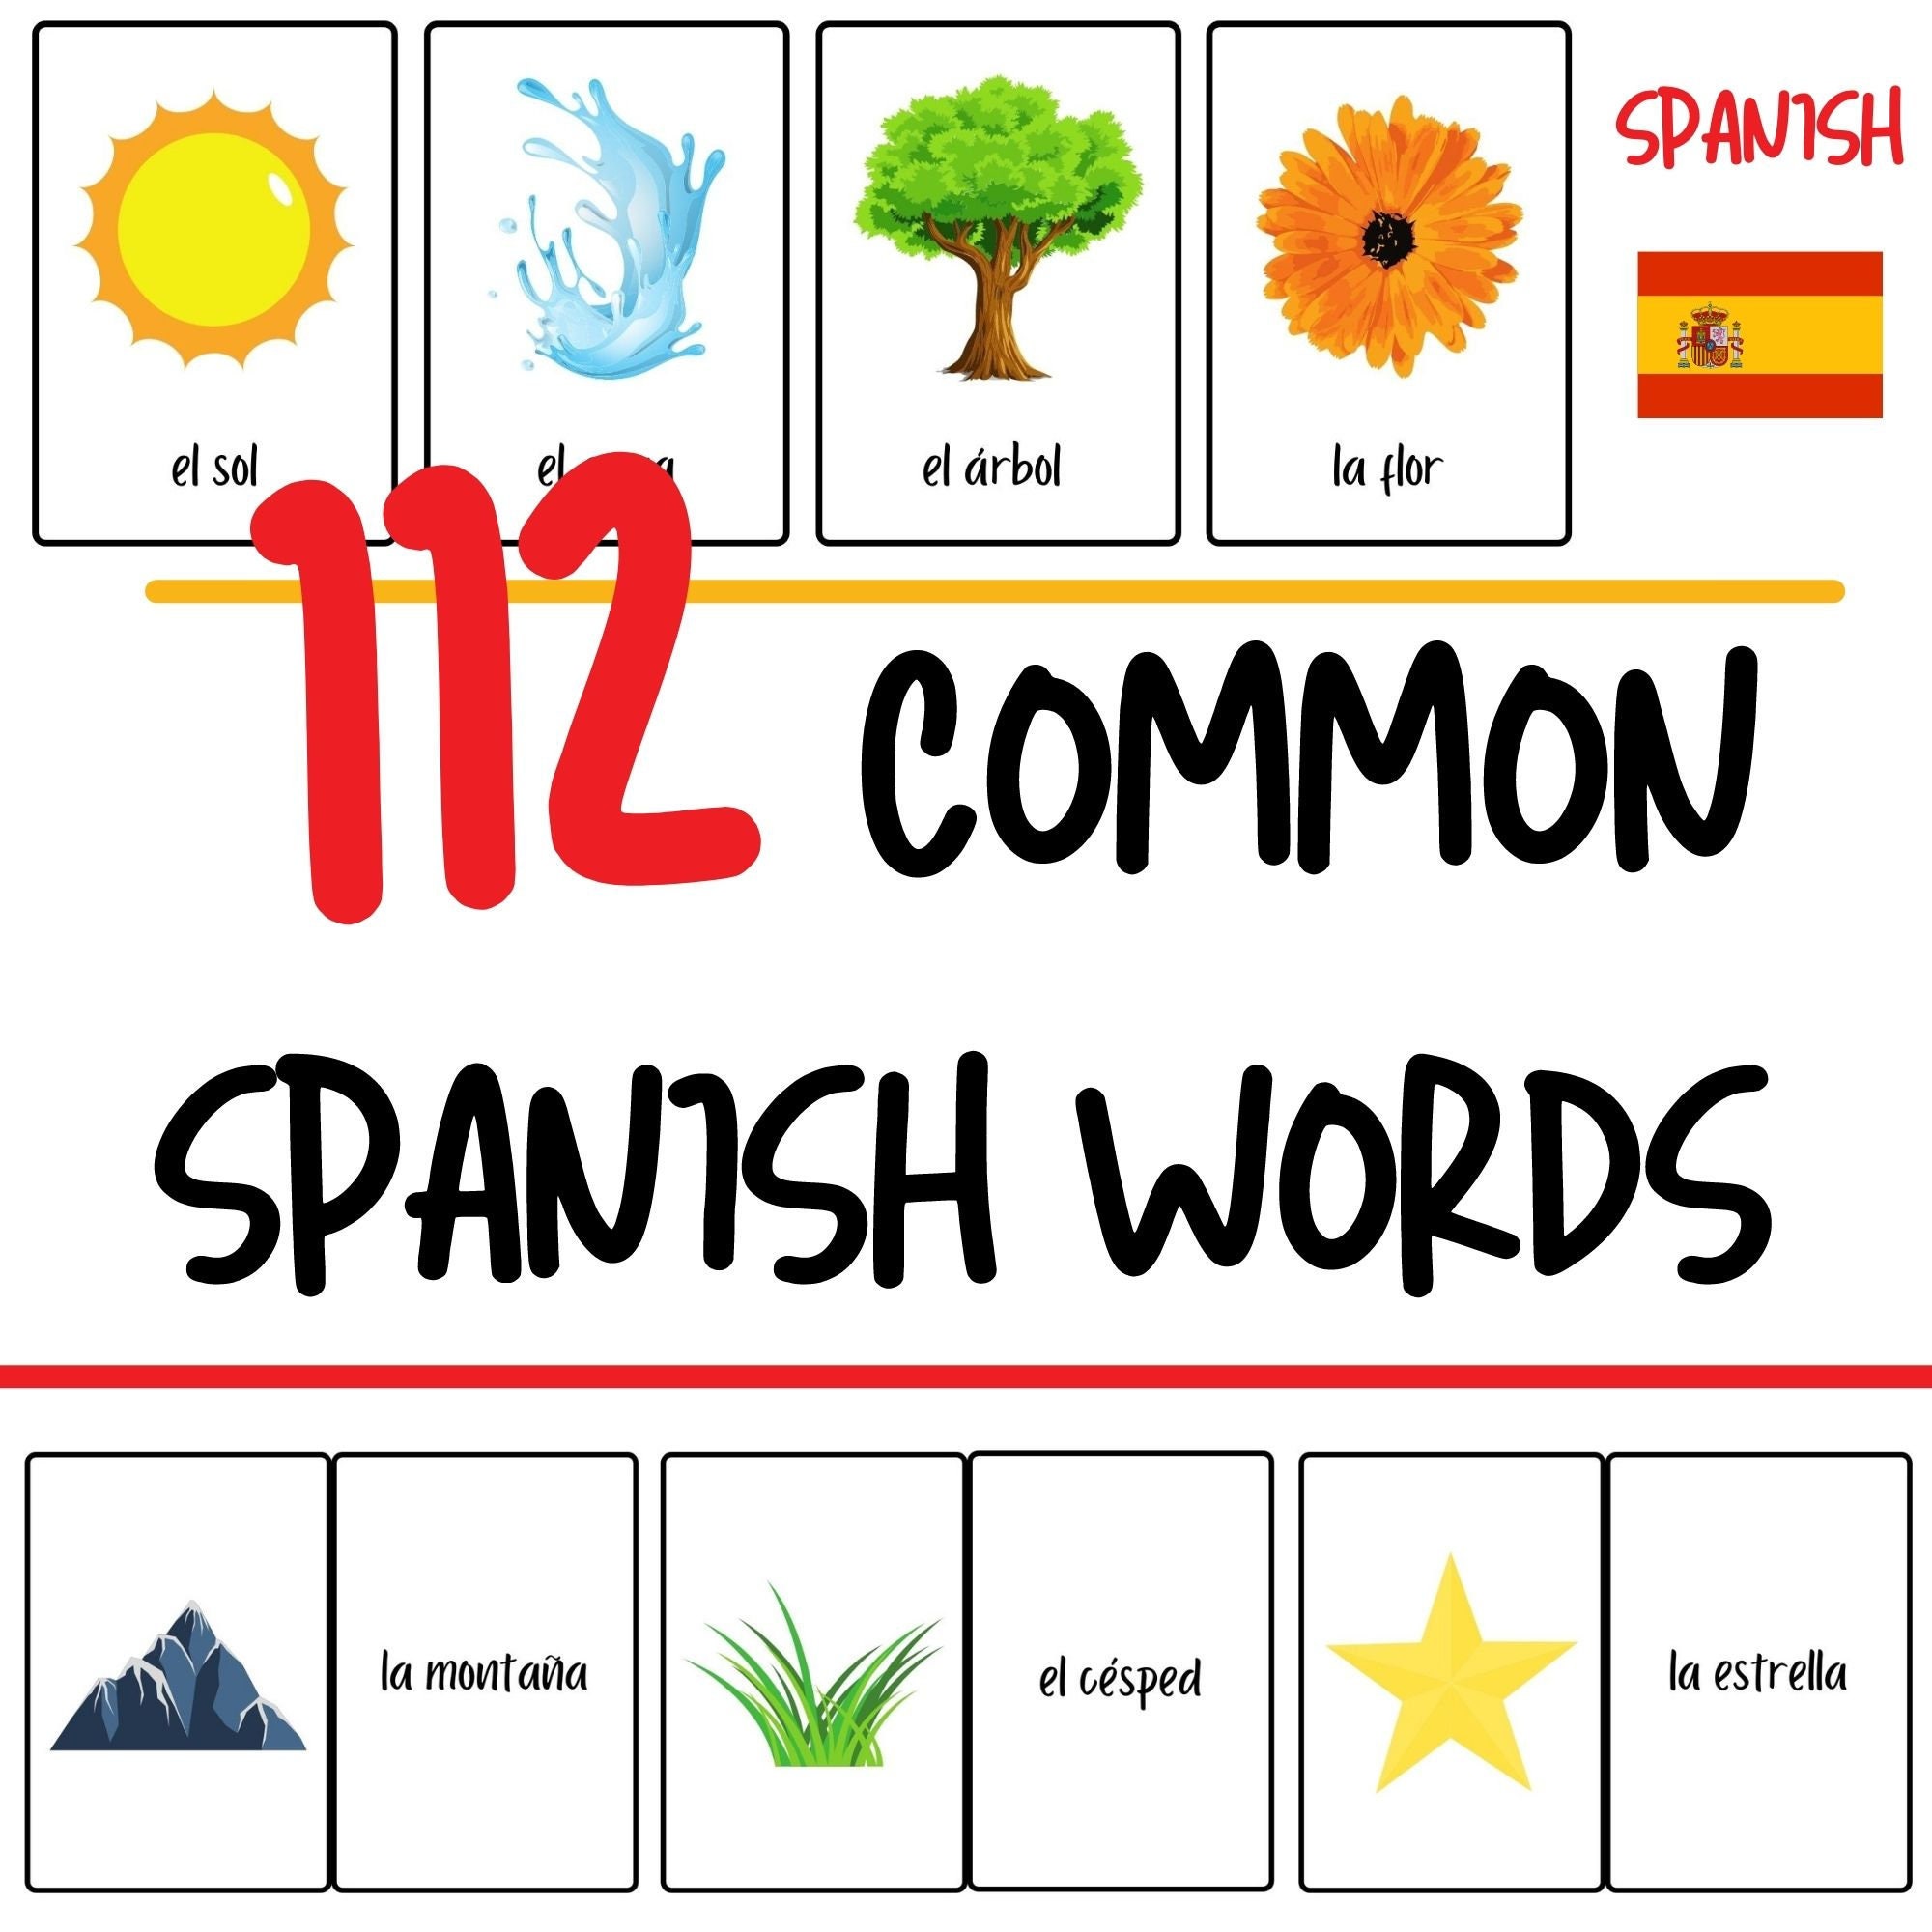 spanish-flashcards-112-common-spanish-words-spanish-for-etsy-uk